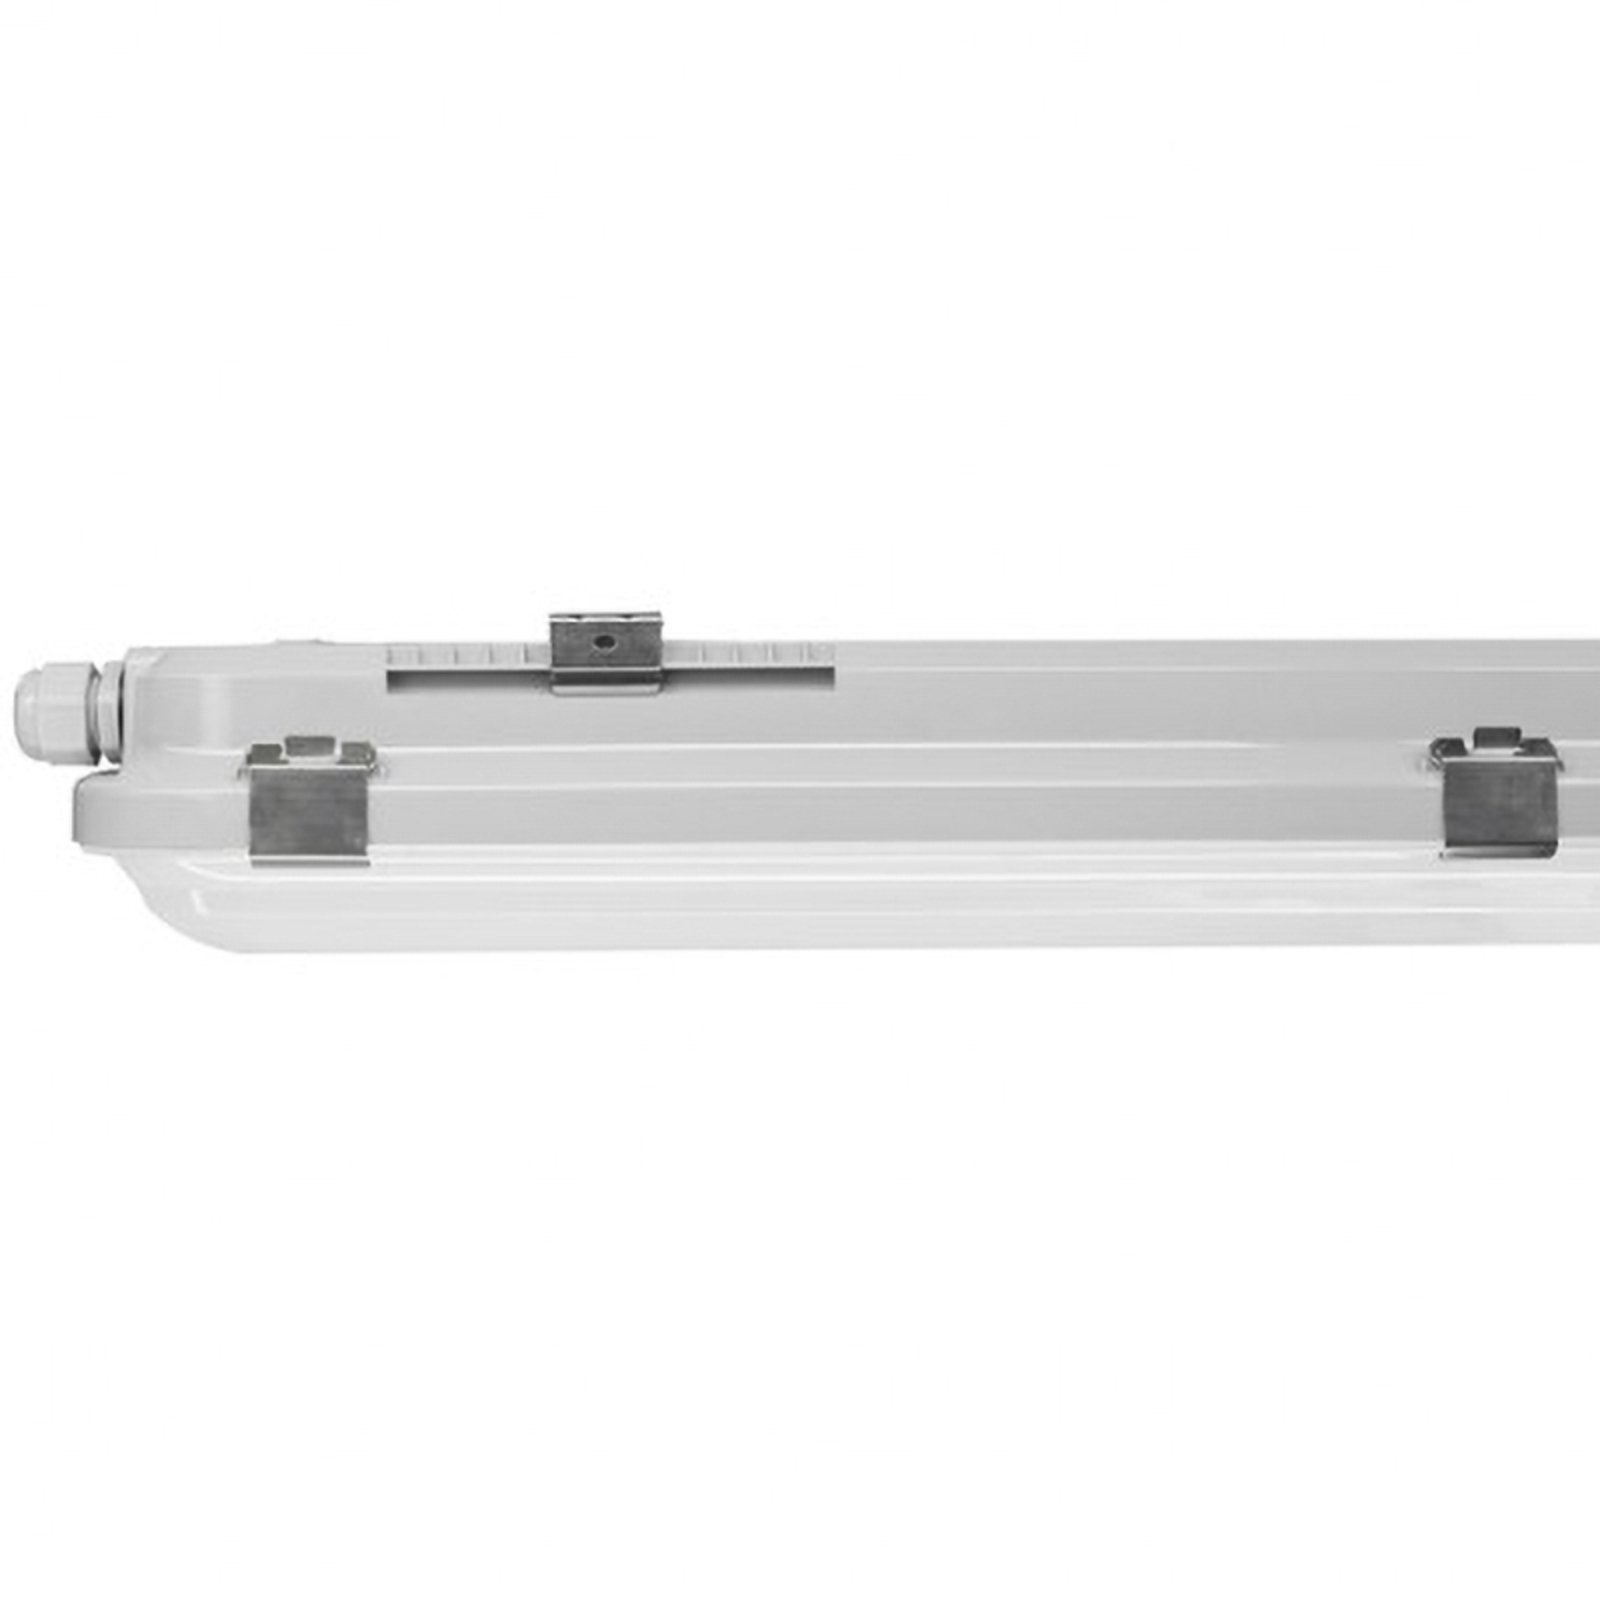 InnoGreen AQUOS 3.0 BASELine LED-lampa 152 cm 840